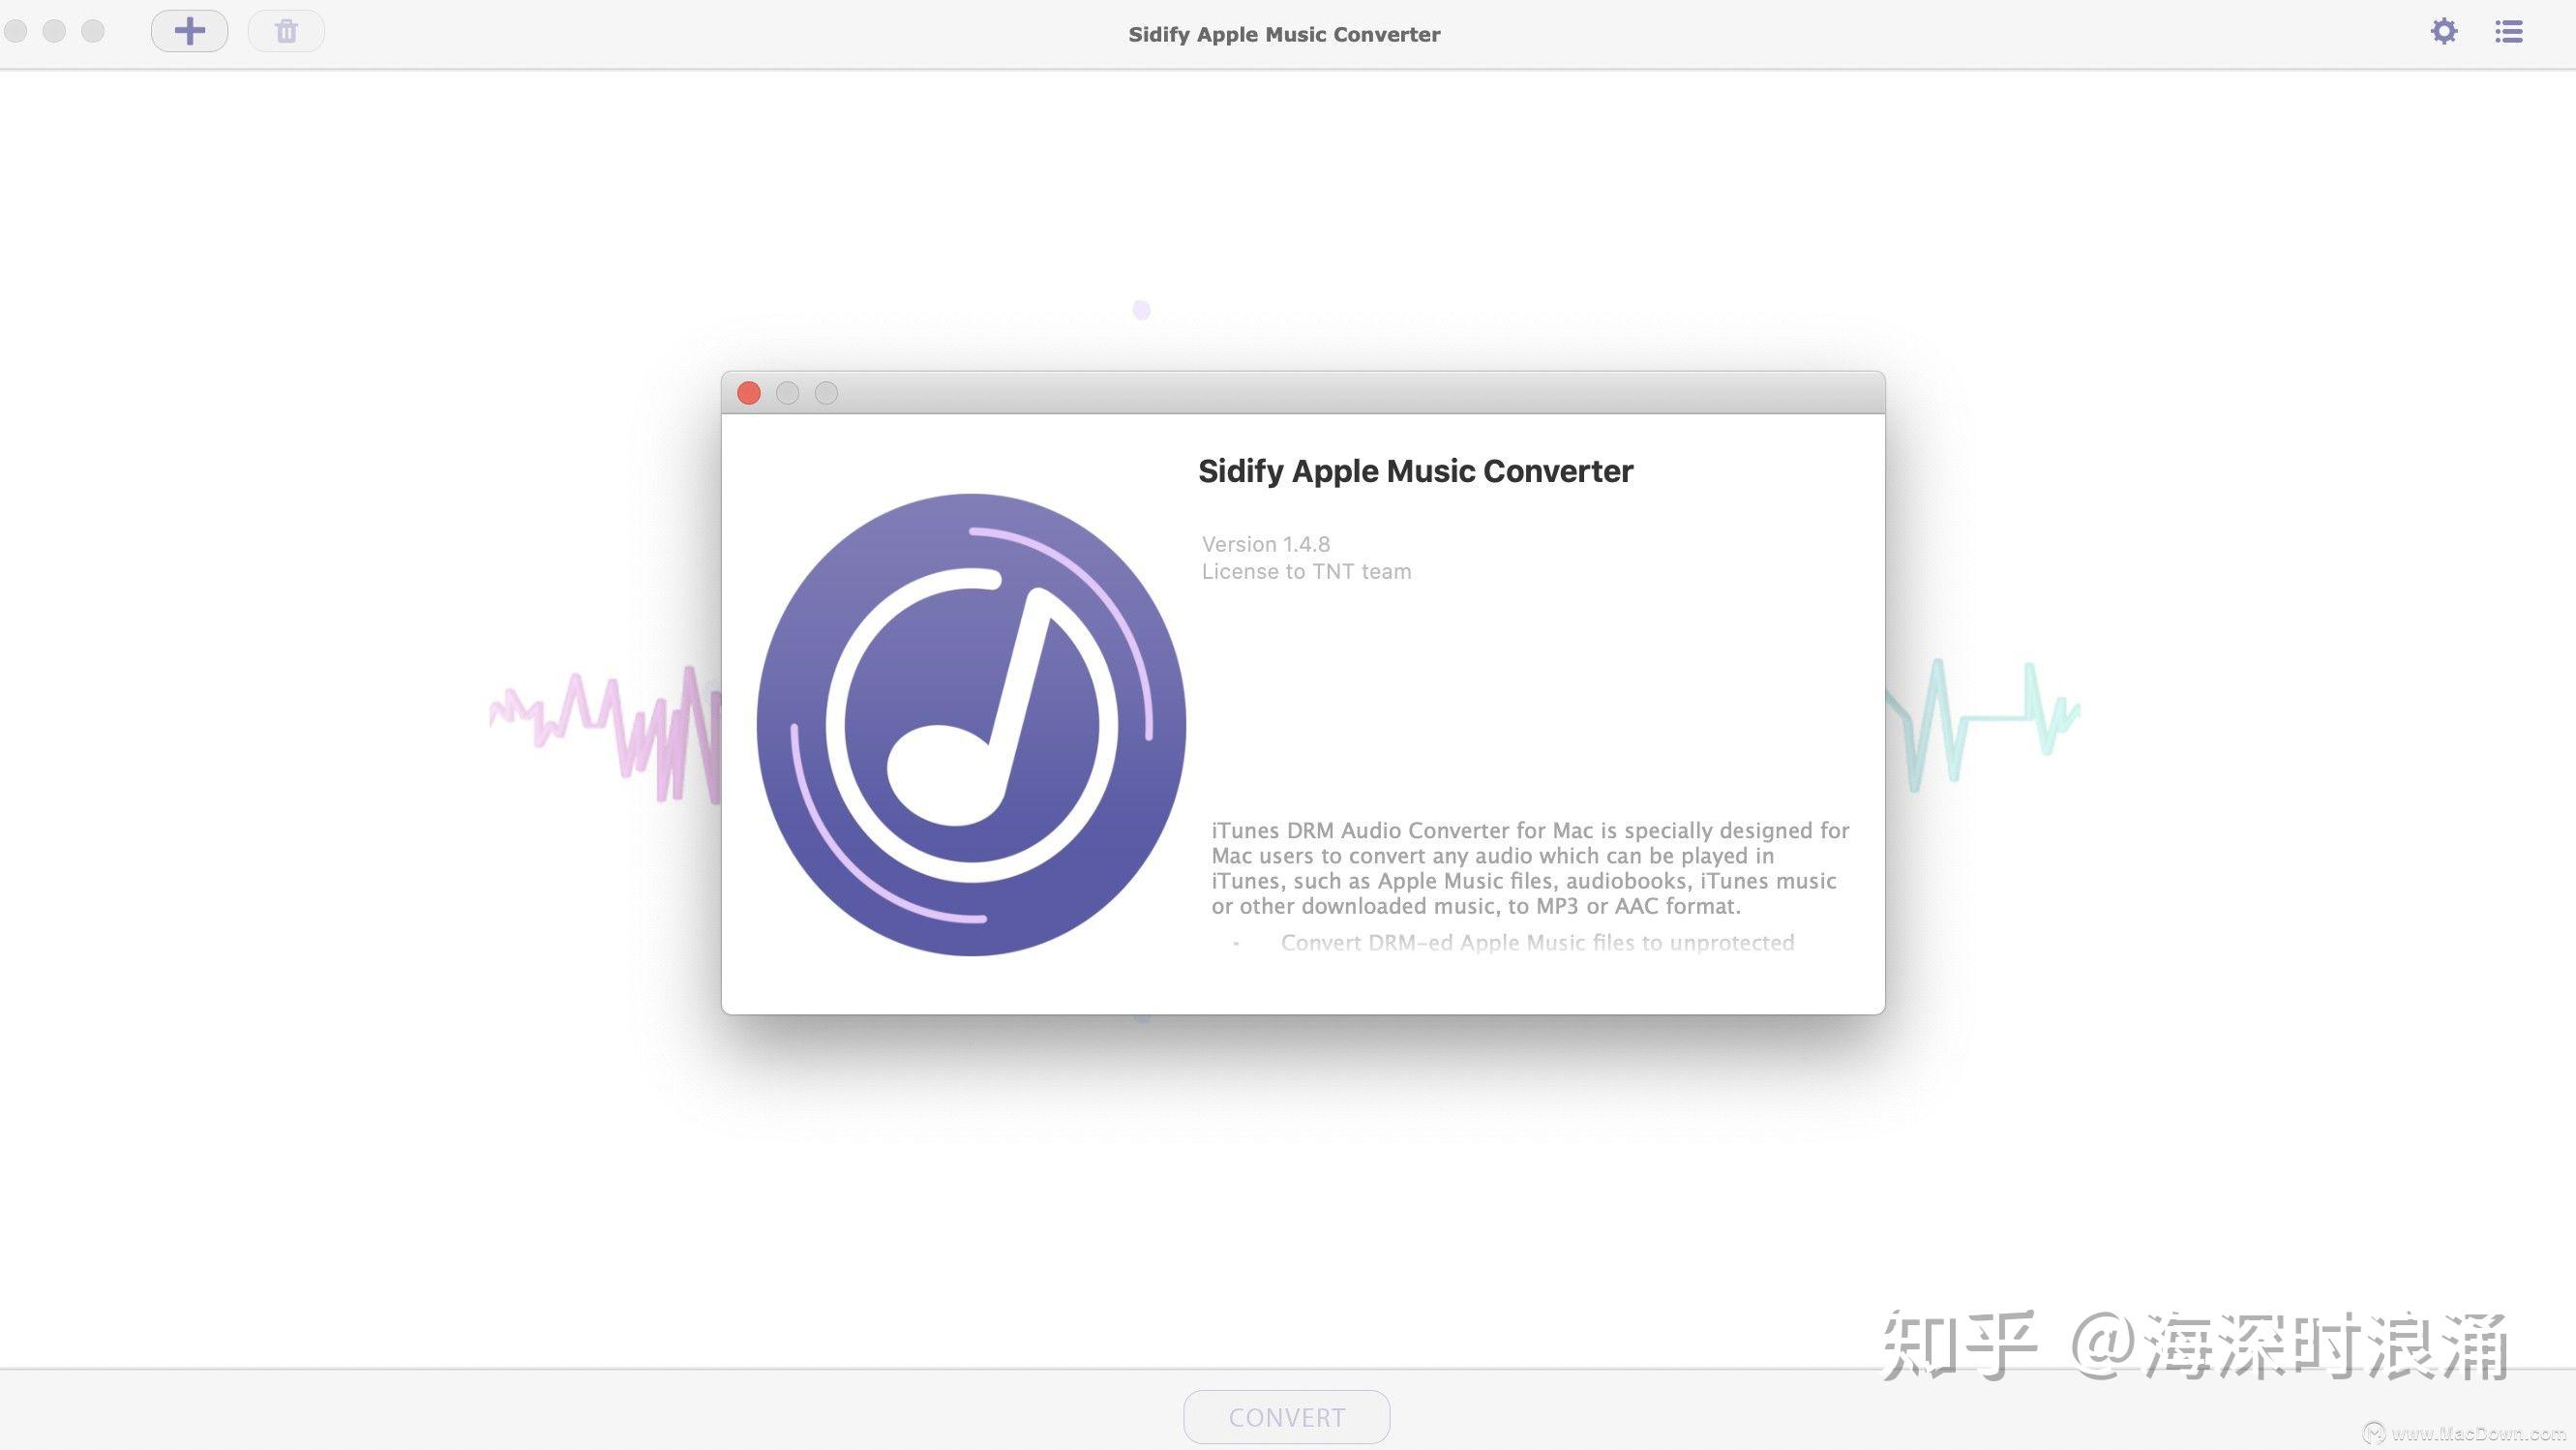 sidify apple music converter no audio in playlist